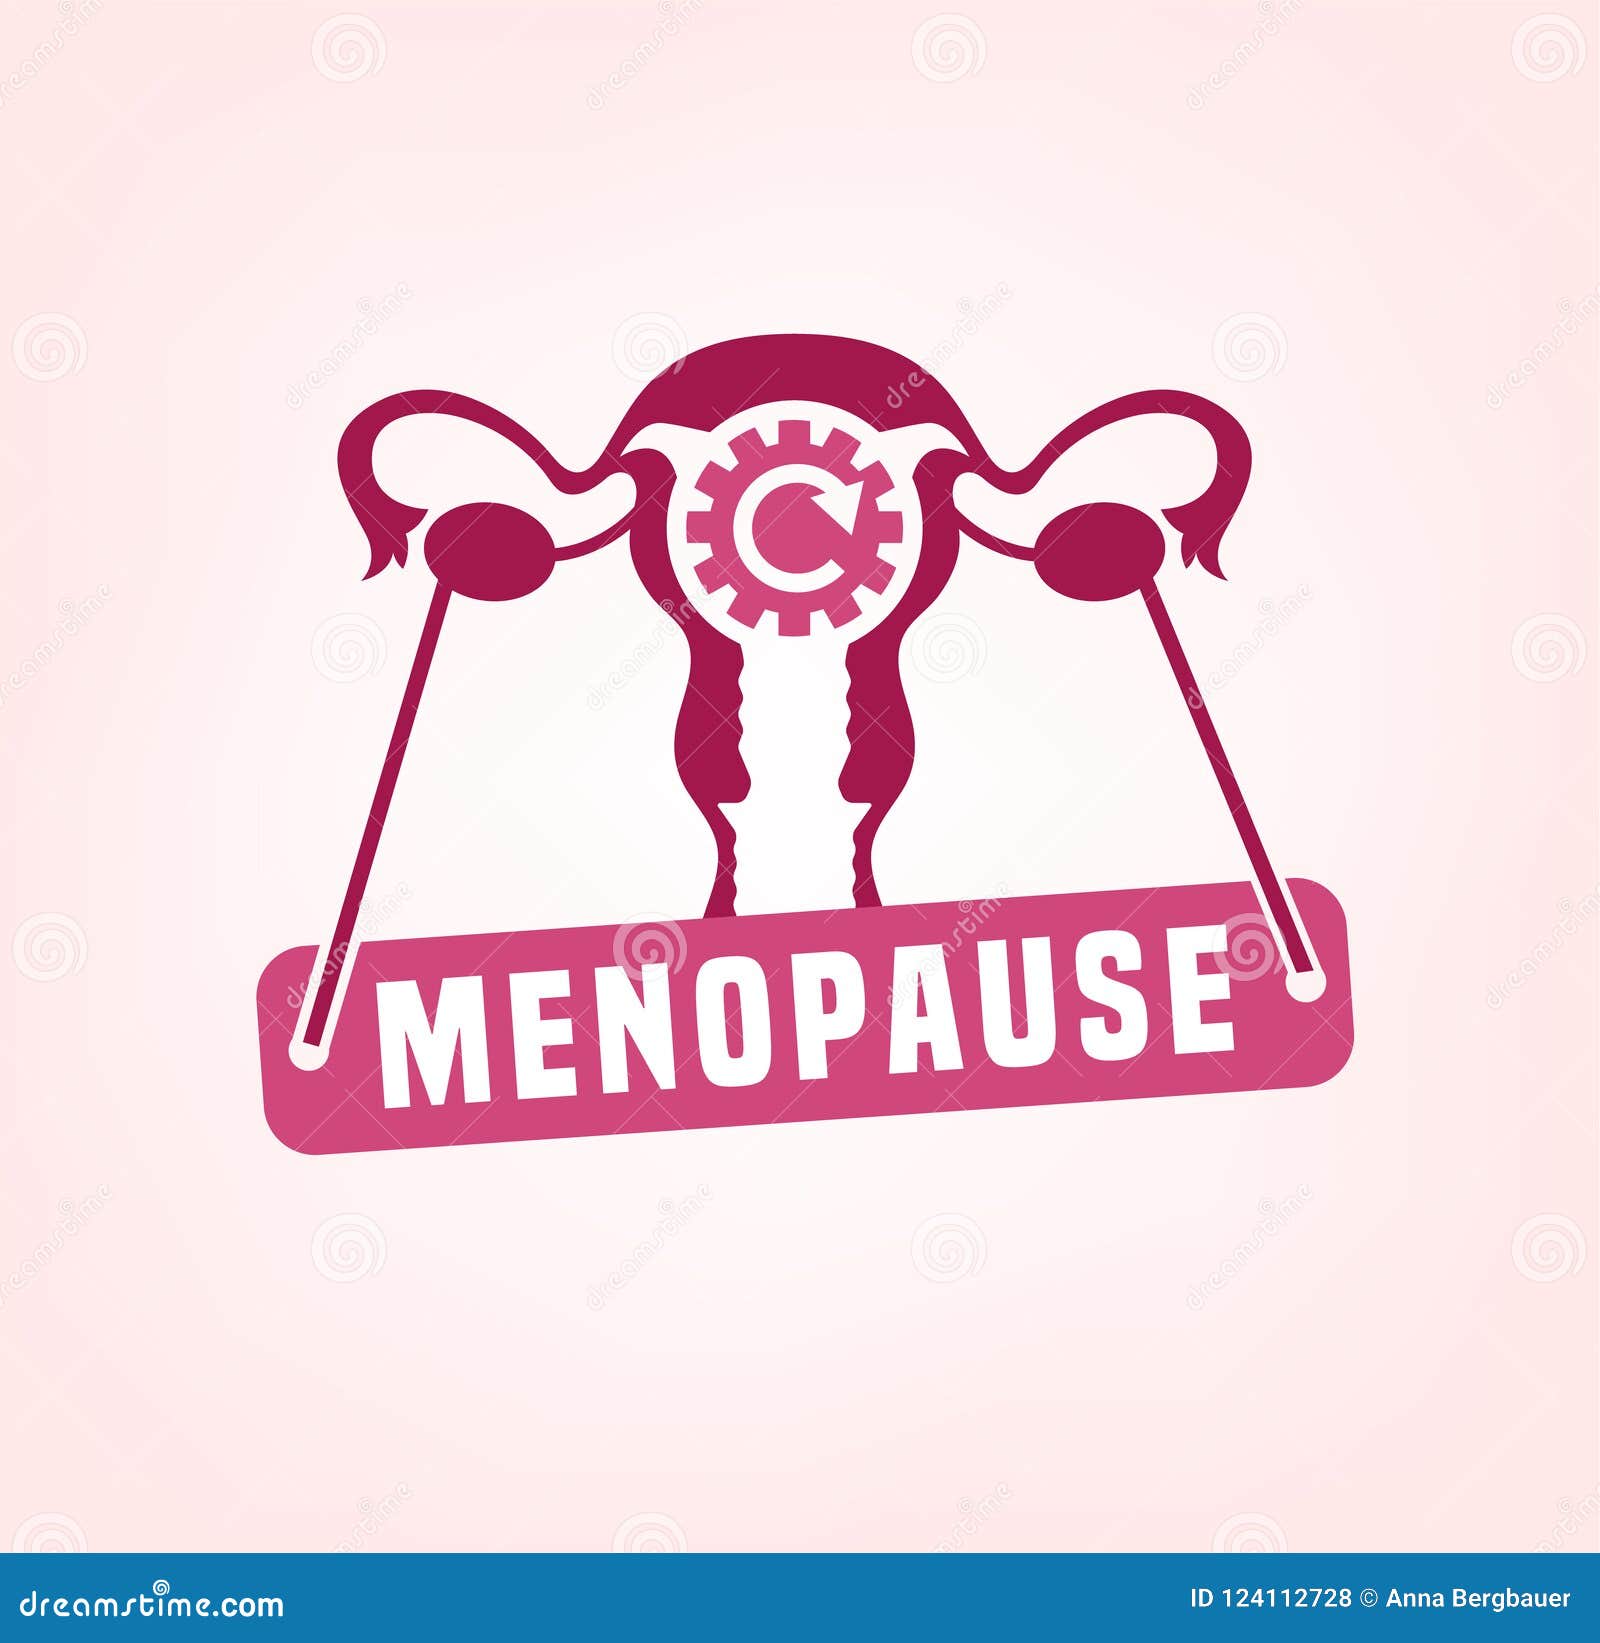 Menopause vector icon stock vector. Illustration of balance - 124112728